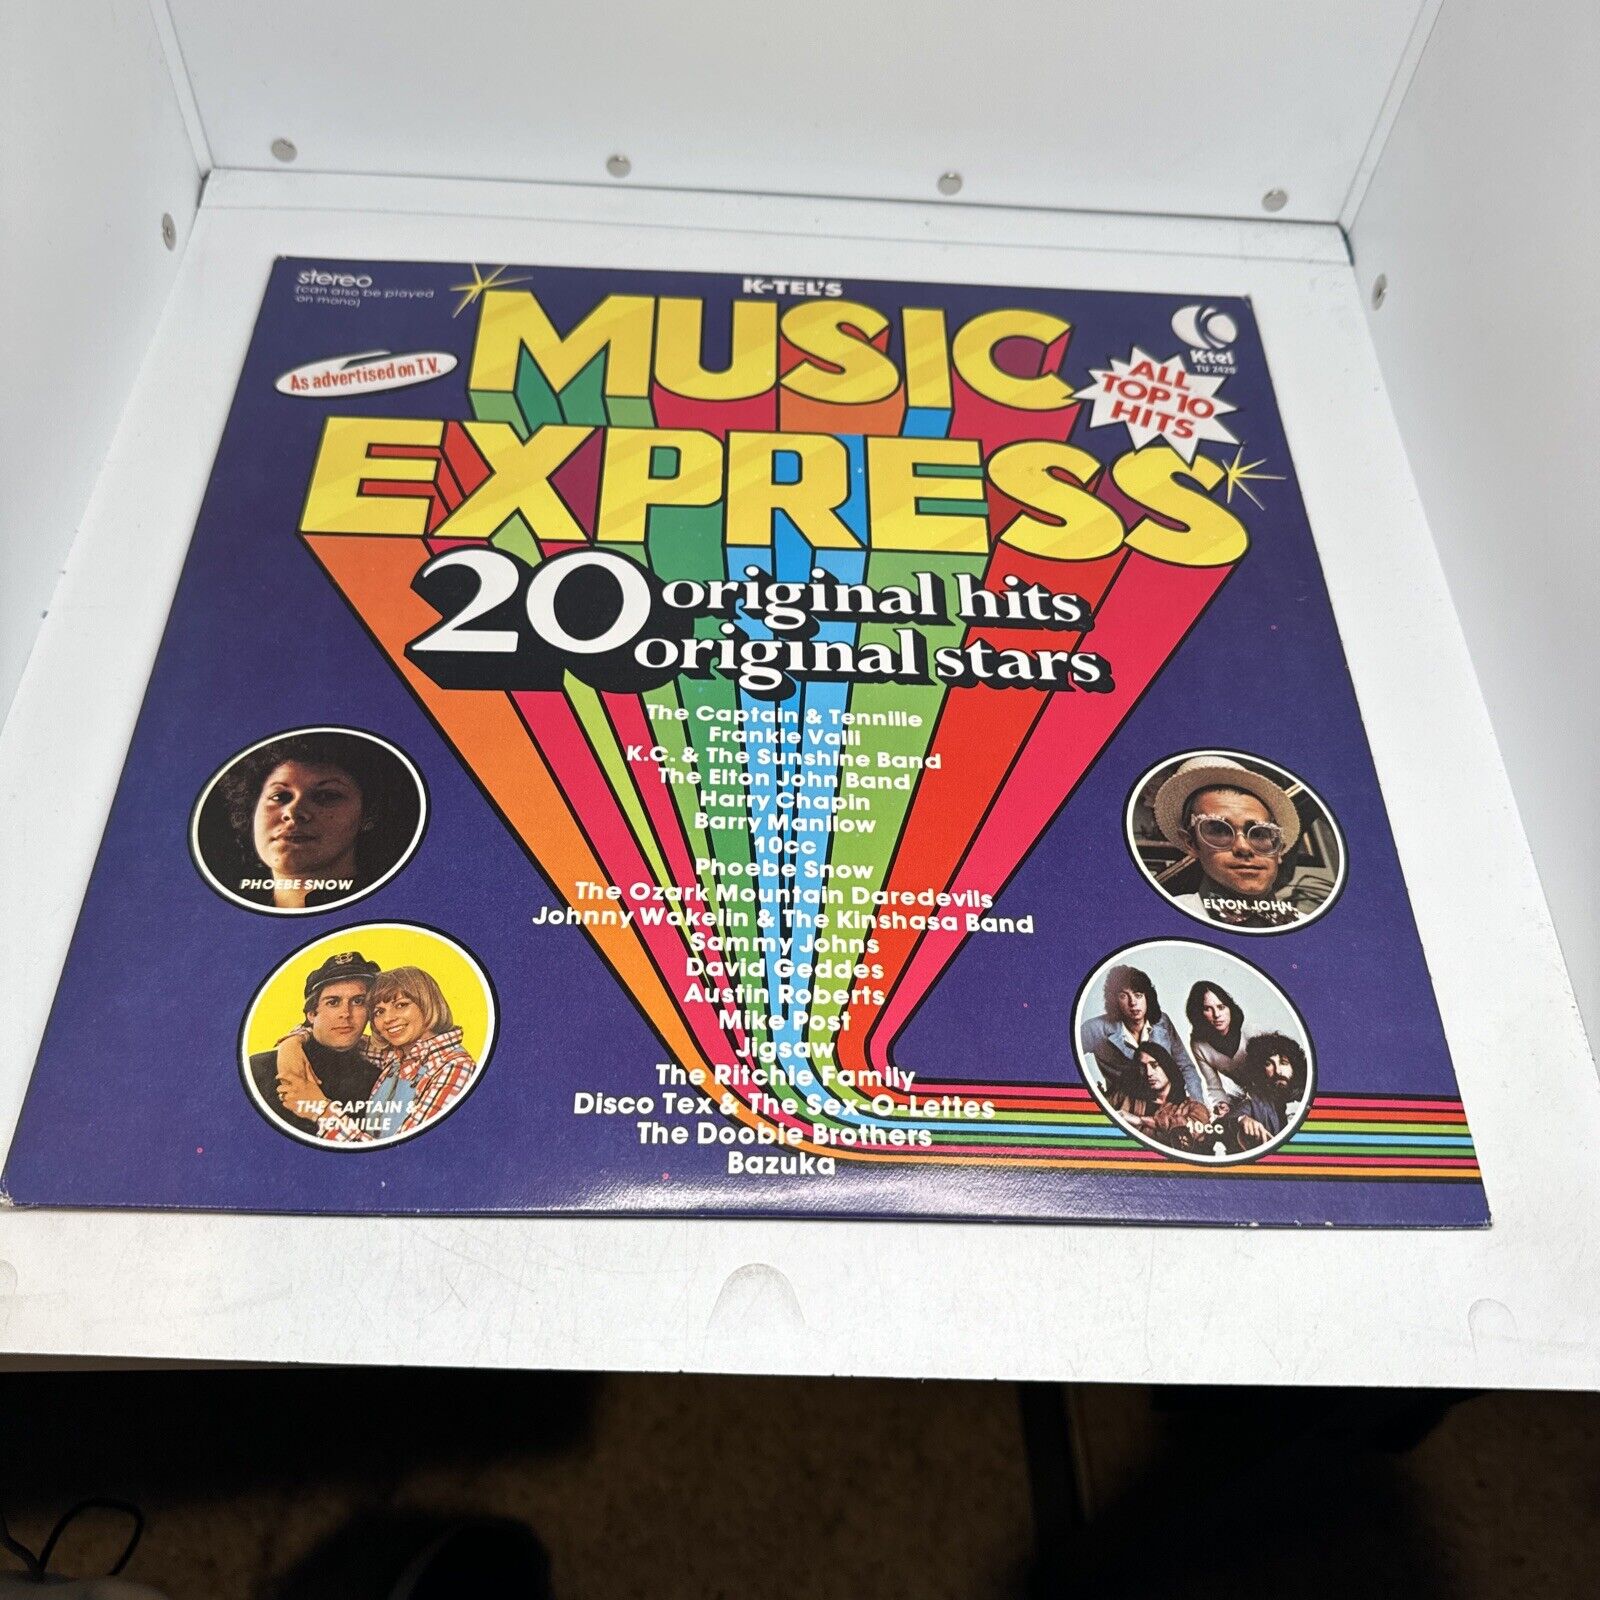 MUSIC EXPRESS v/a Vinyl LP 1975 K-Tel TU 2420 *20 Original Hits* With Ad